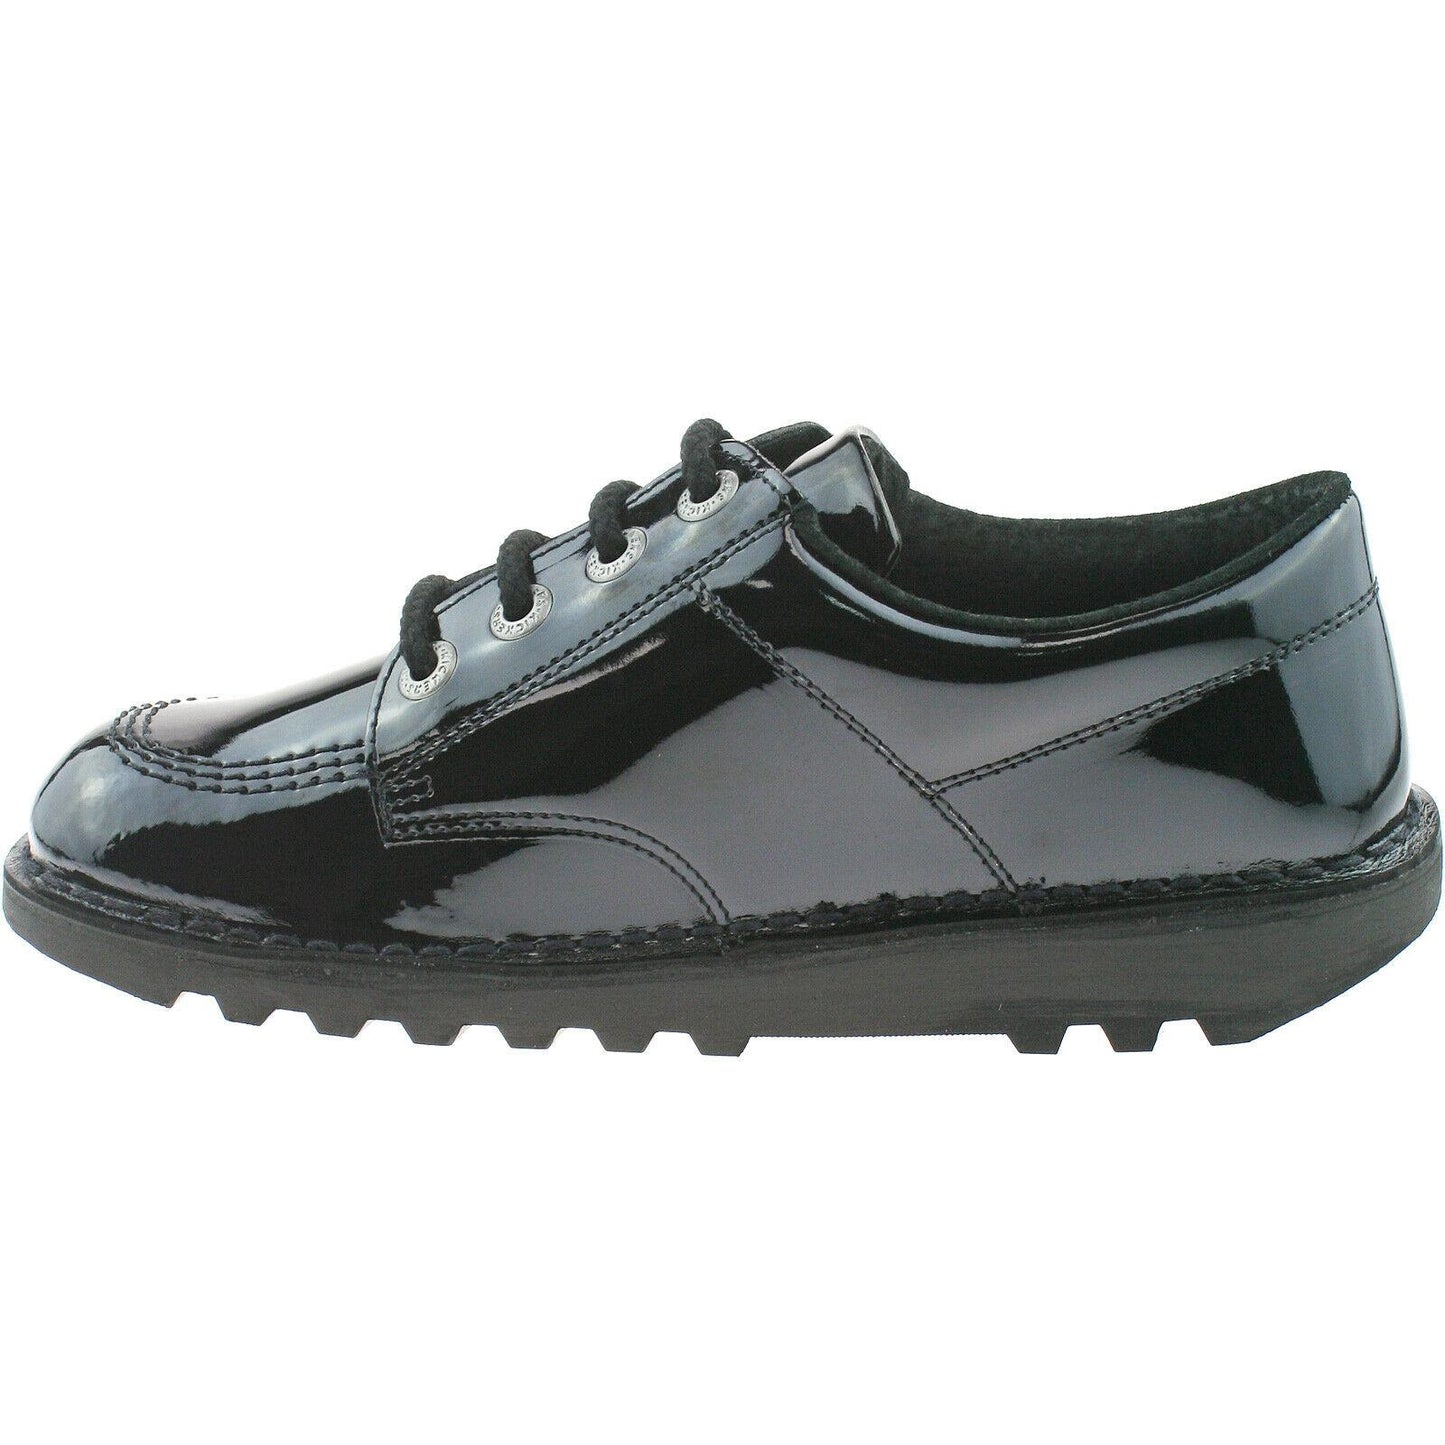 Girls Kickers Black School Shoes Youths Patent Kick Lo 1-13499